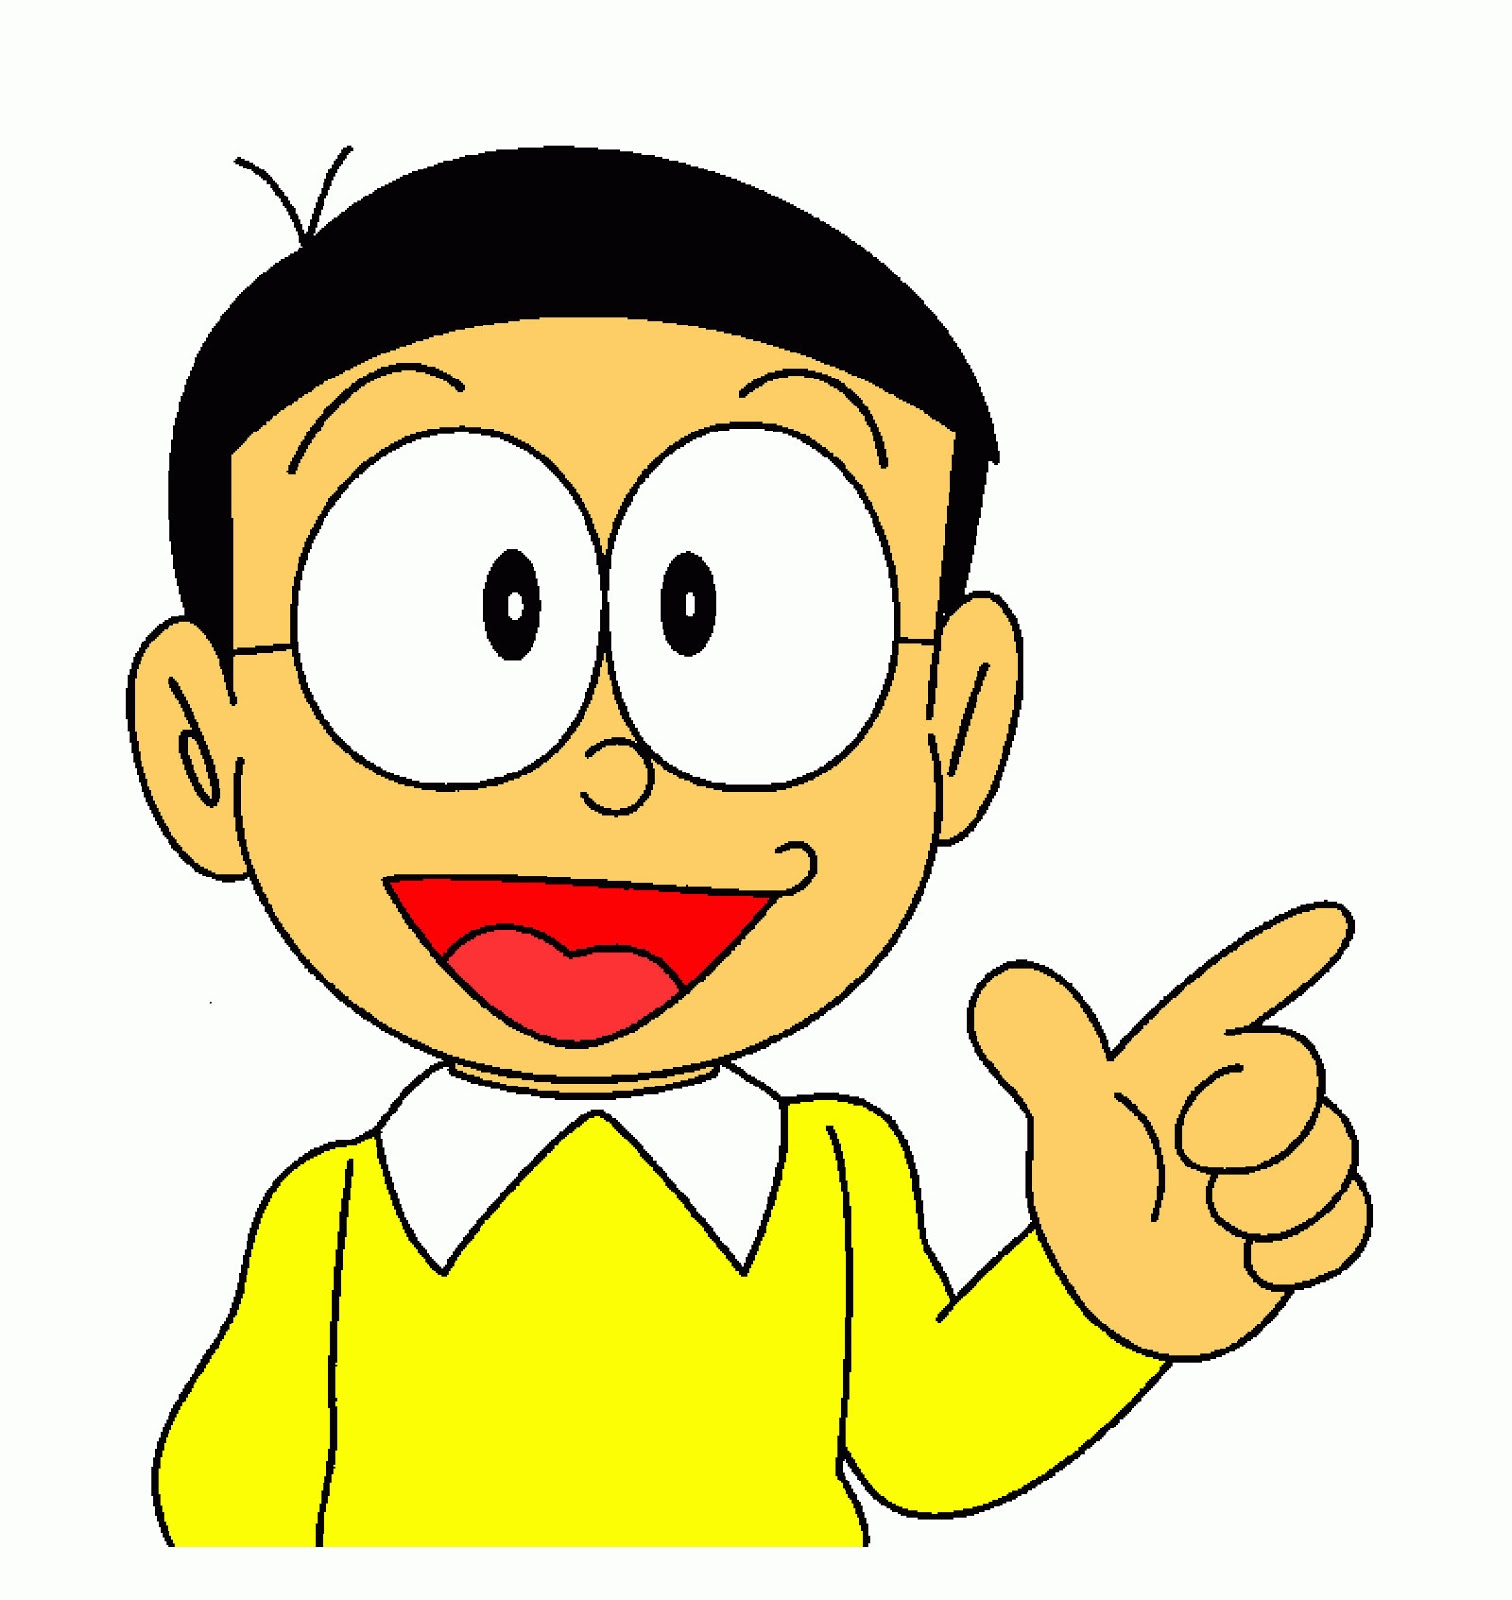 Gambar Kartun Doraemon Sedang Belajar Gambar Gokil